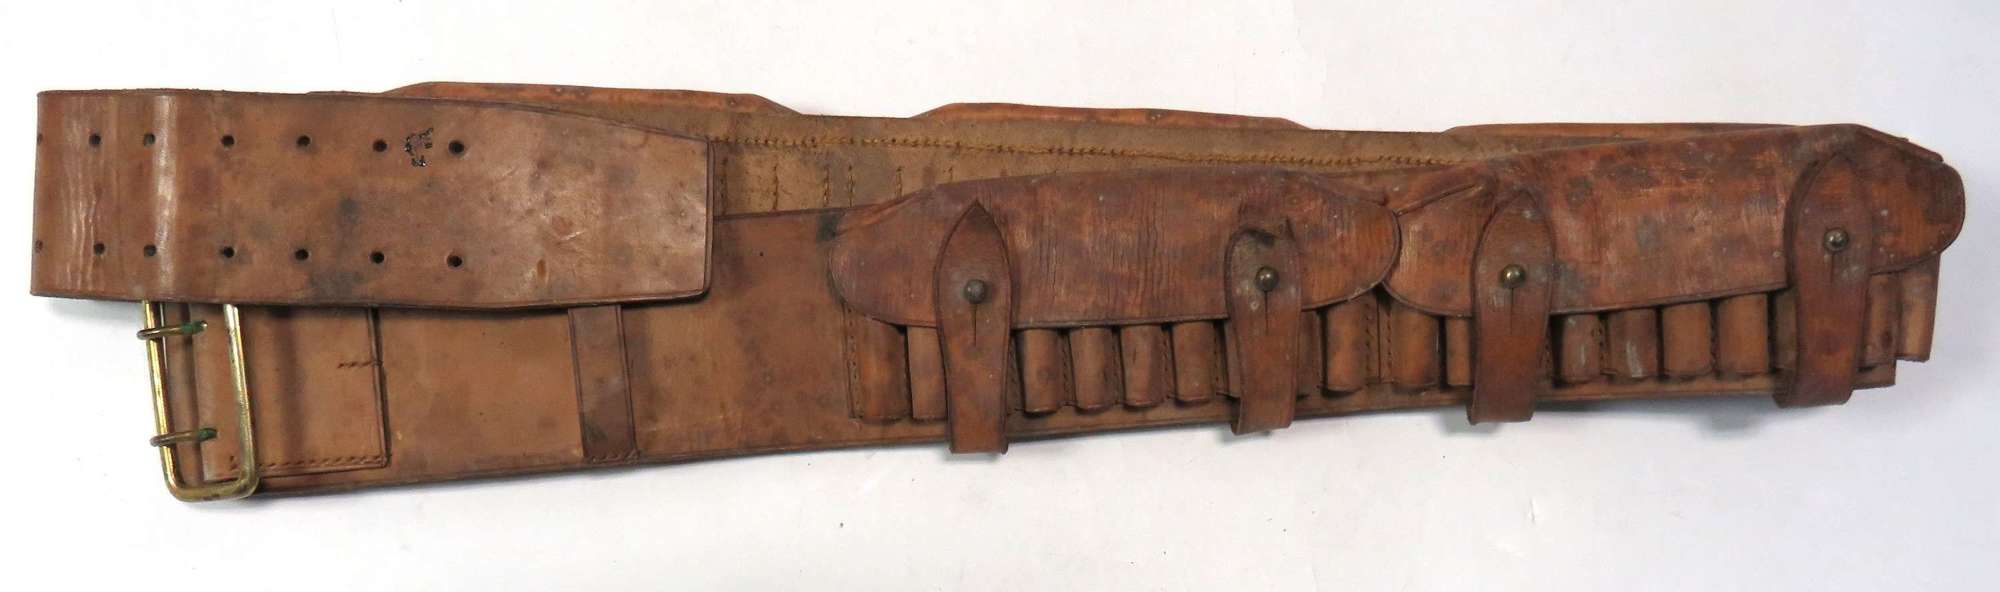 Rare Attributed Boer War Leather Ammunition Bandolier